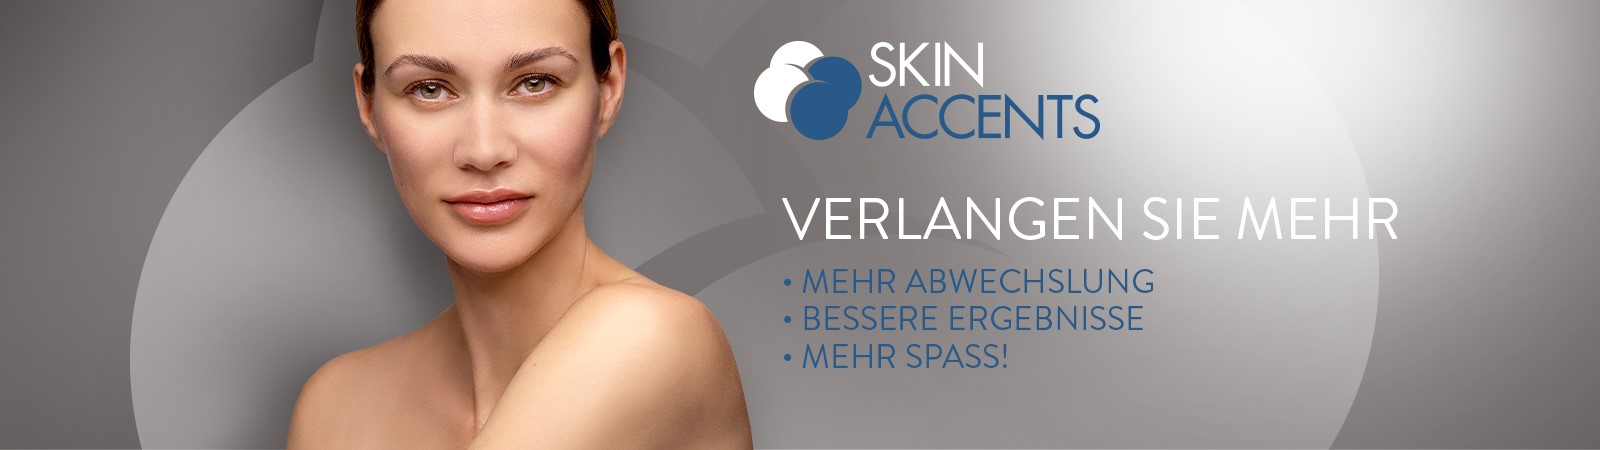 Skin Accents key visual